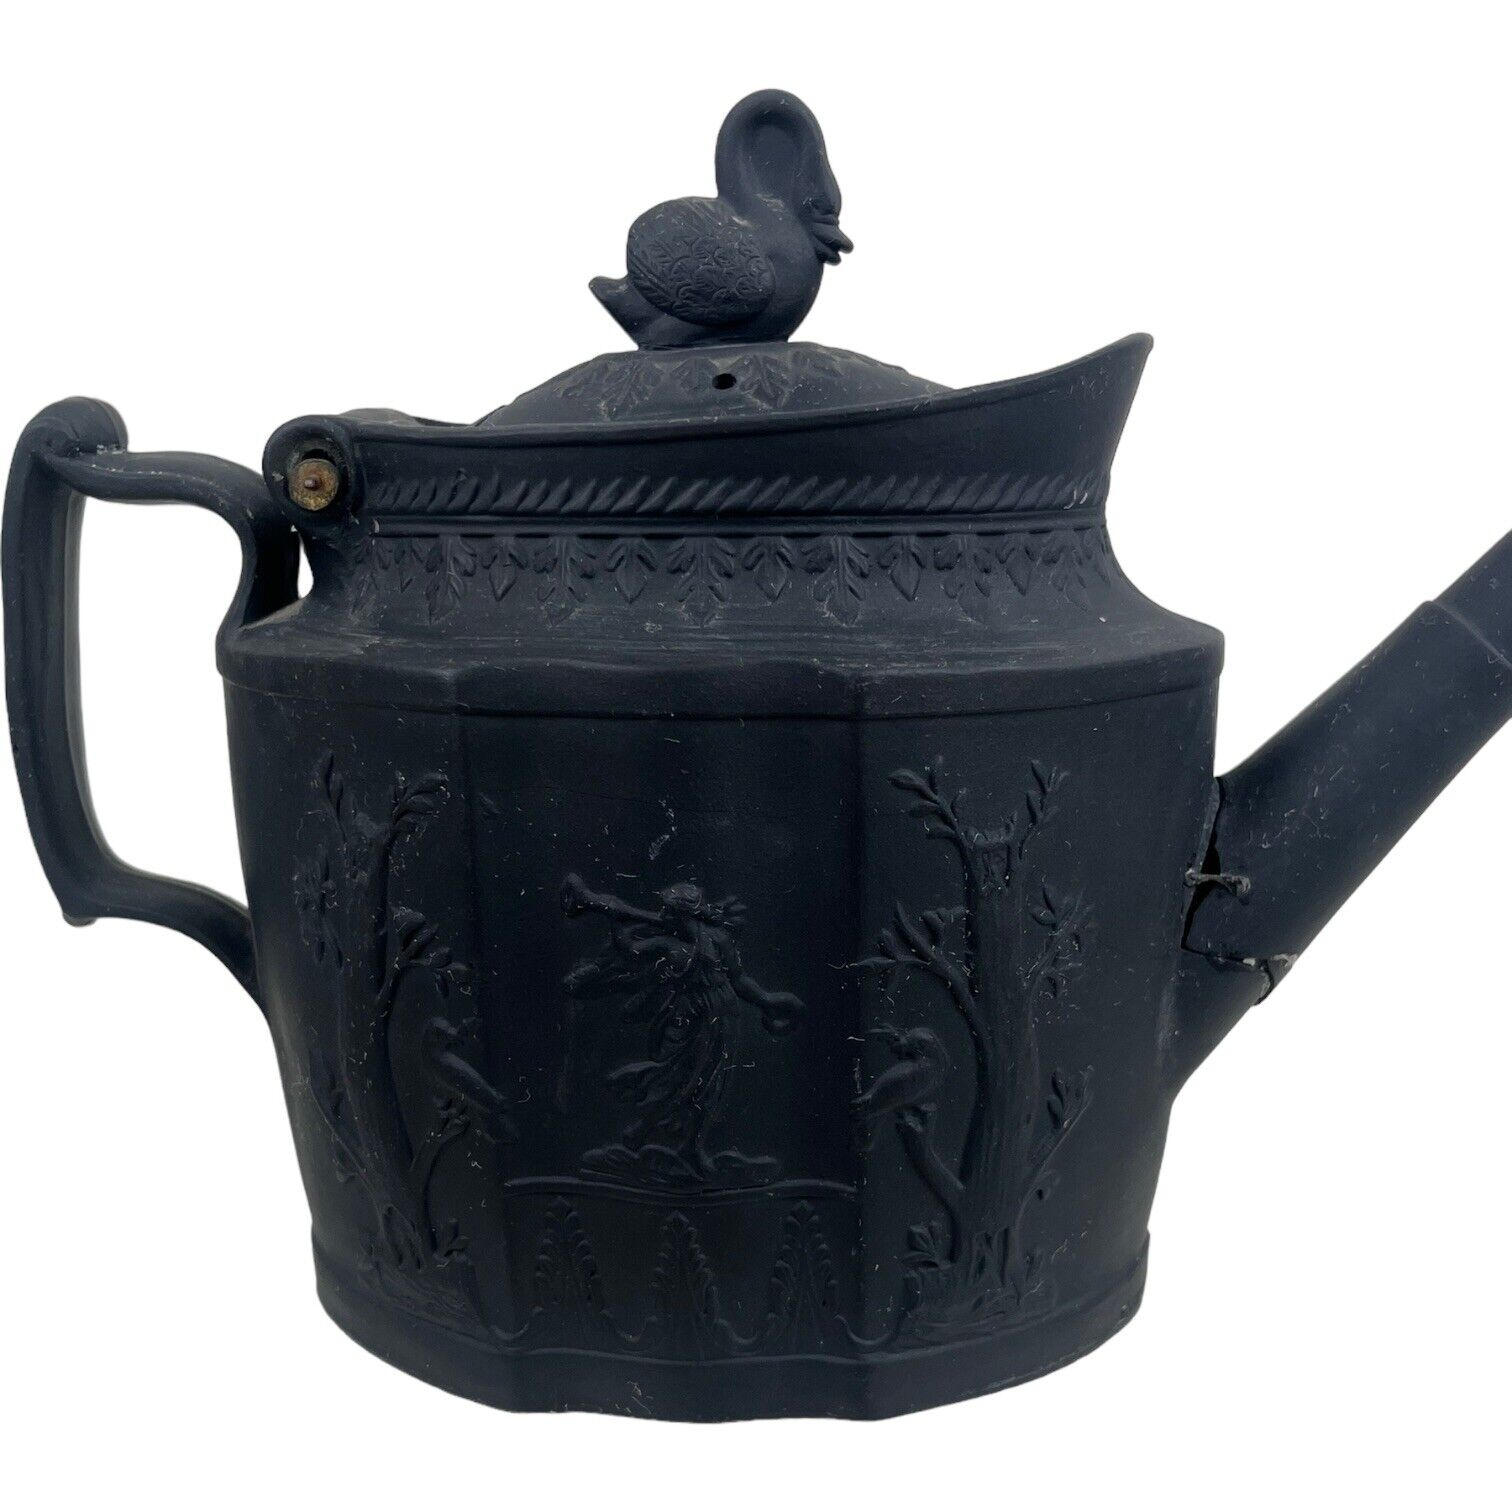 Antique Late 18th Early 19th Cen Black Basalt Teapot Swan Finial Make Do Repairs